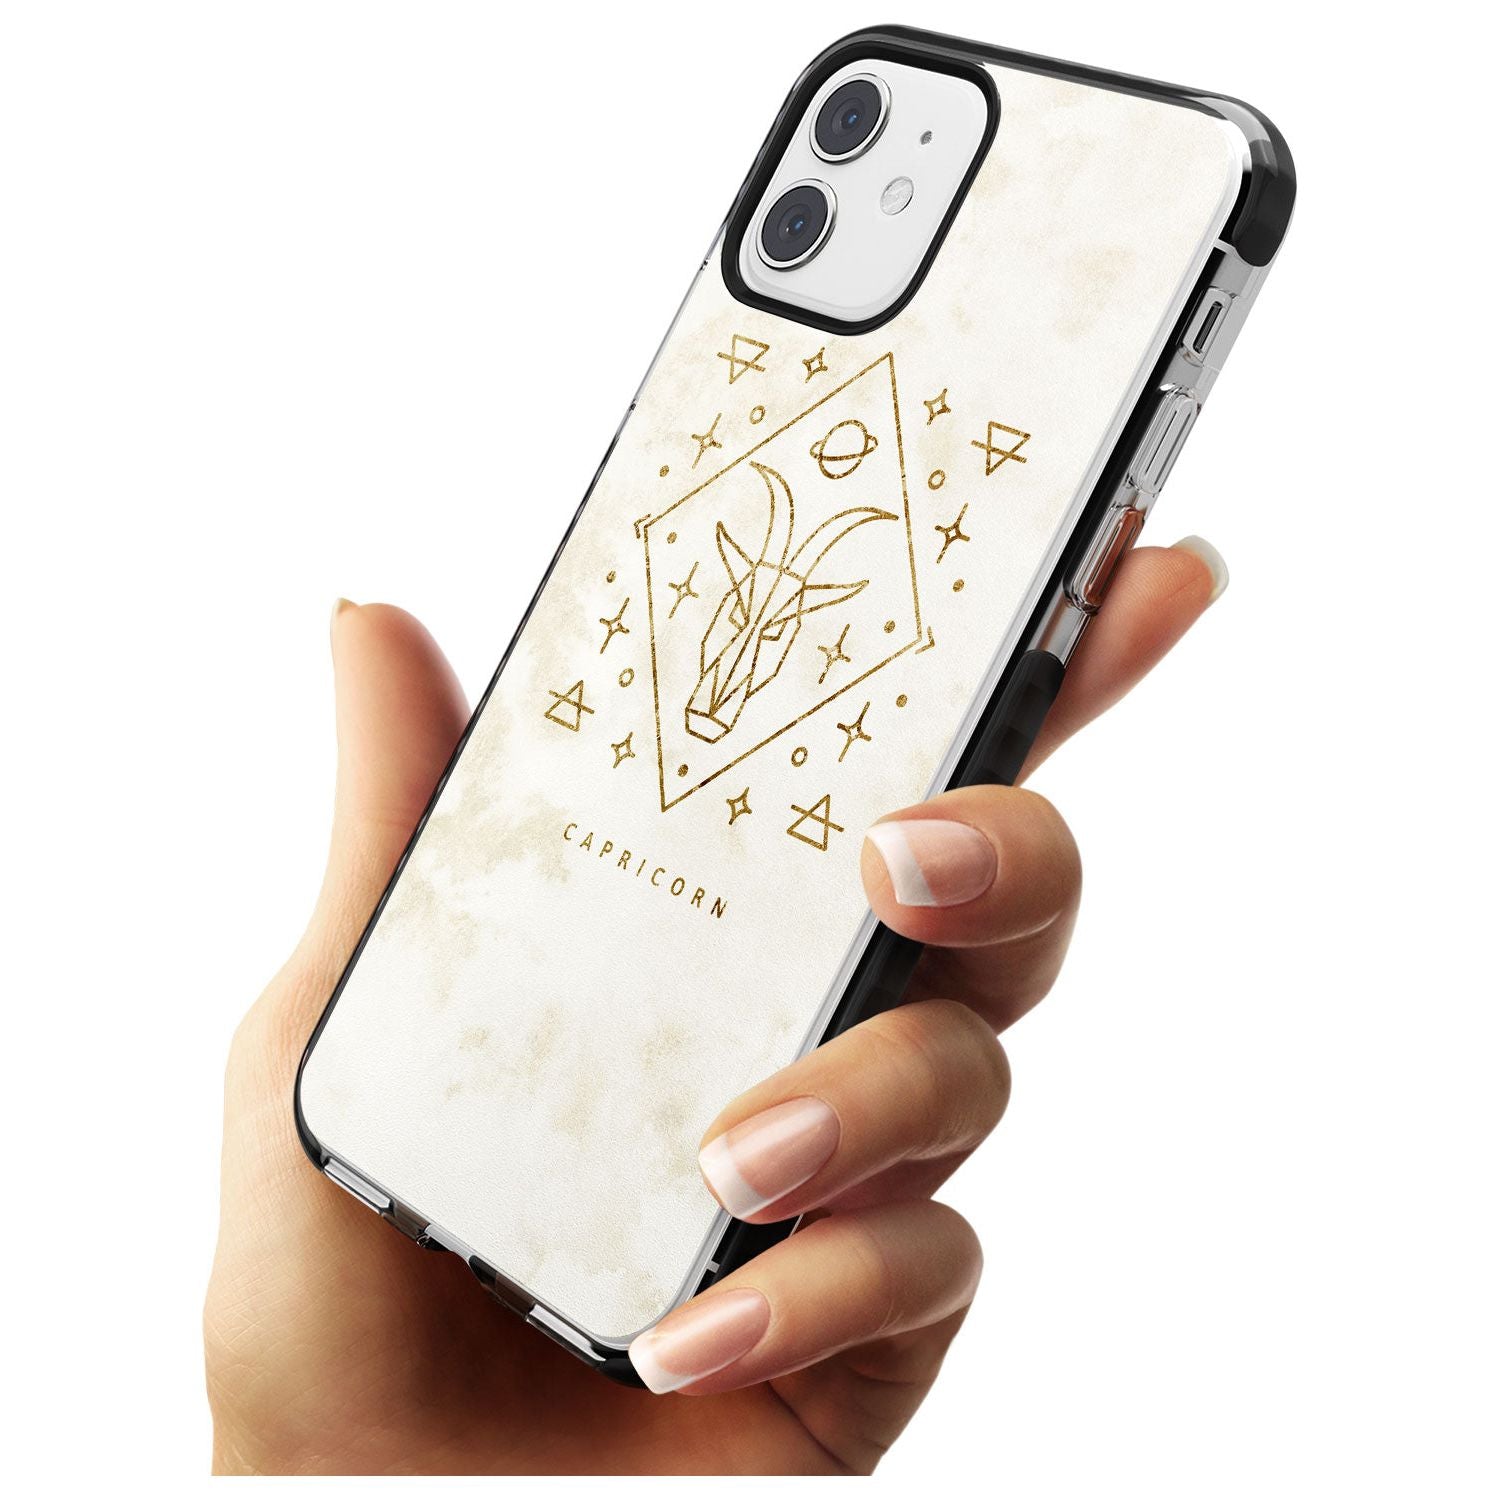 Capricorn Emblem - Solid Gold Marbled Design Black Impact Phone Case for iPhone 11